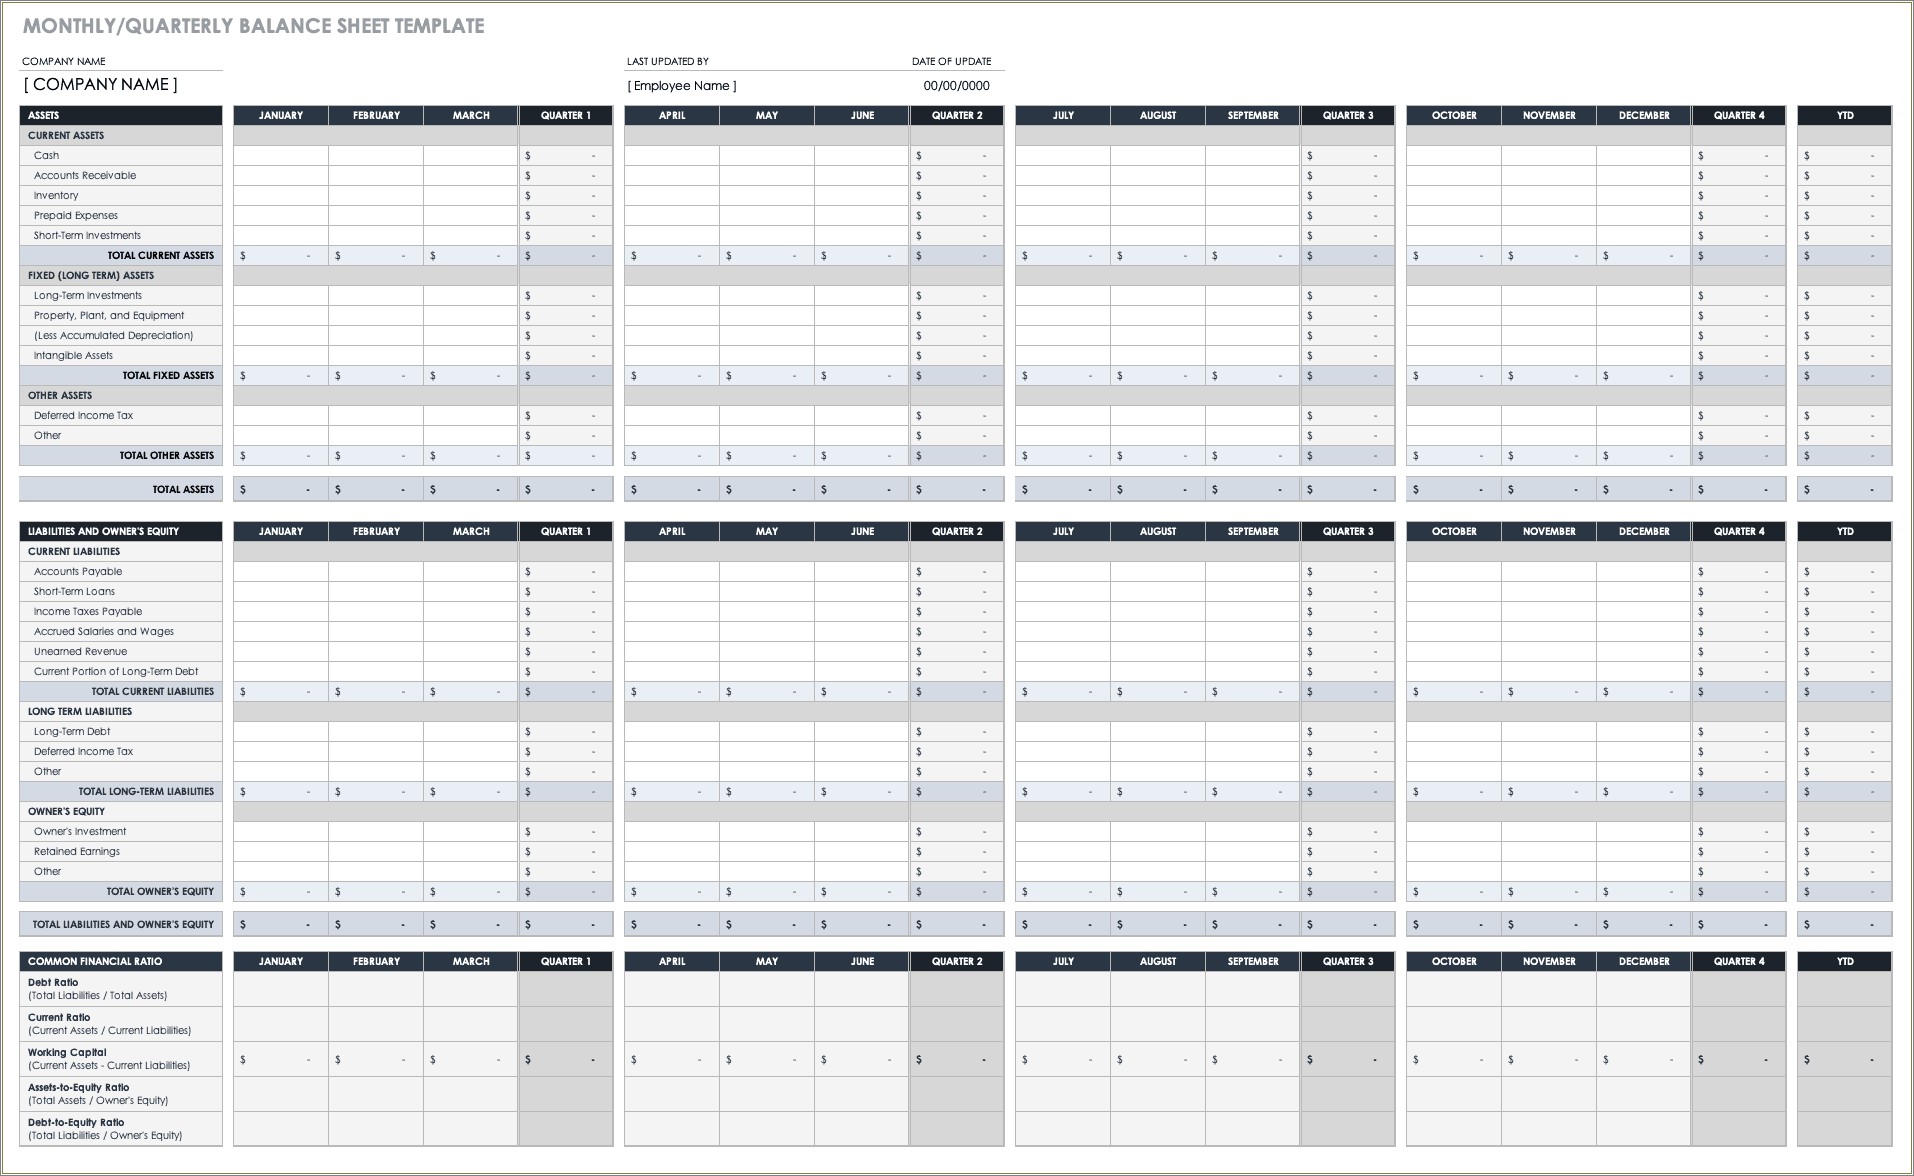 Free Excel Balance Sheet Templates For Sole Proprietorship